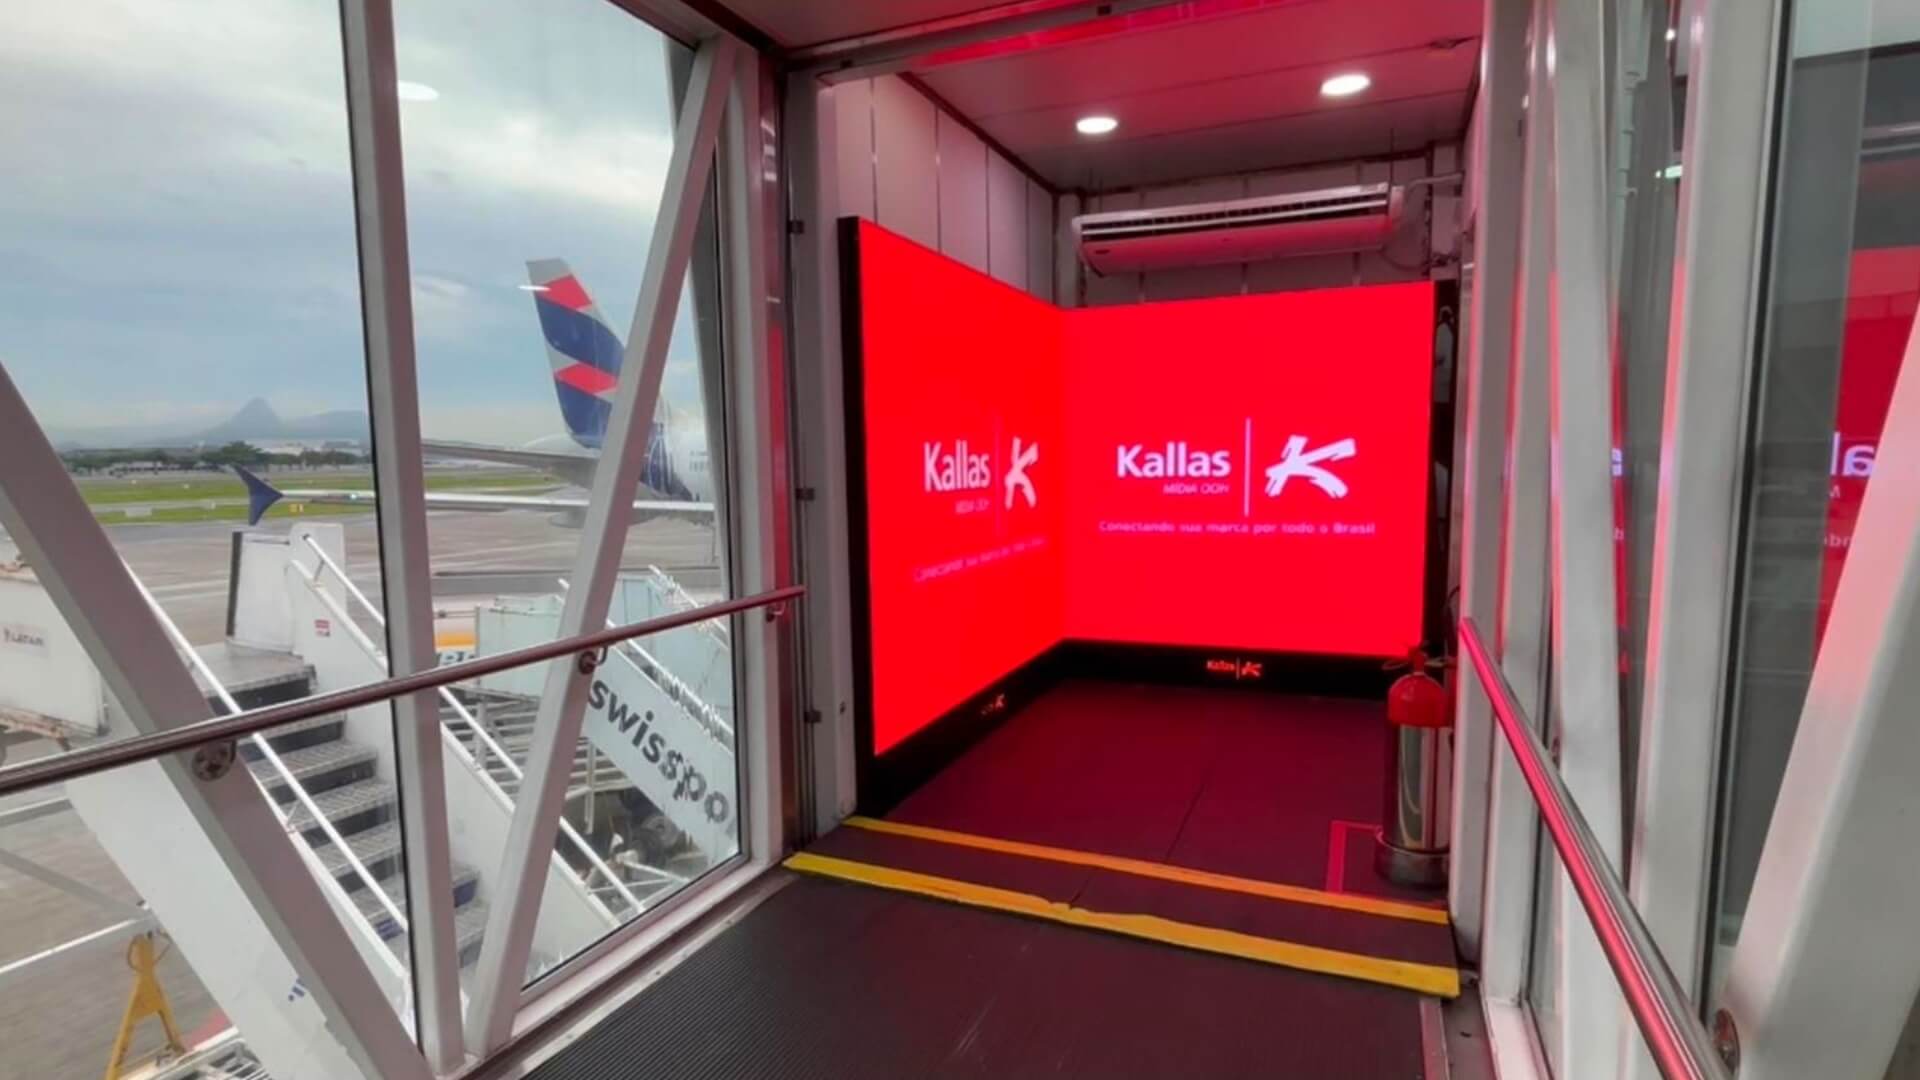 Kallas expande presença no Aeroporto Santos Dumont com 56 telas nas passarelas